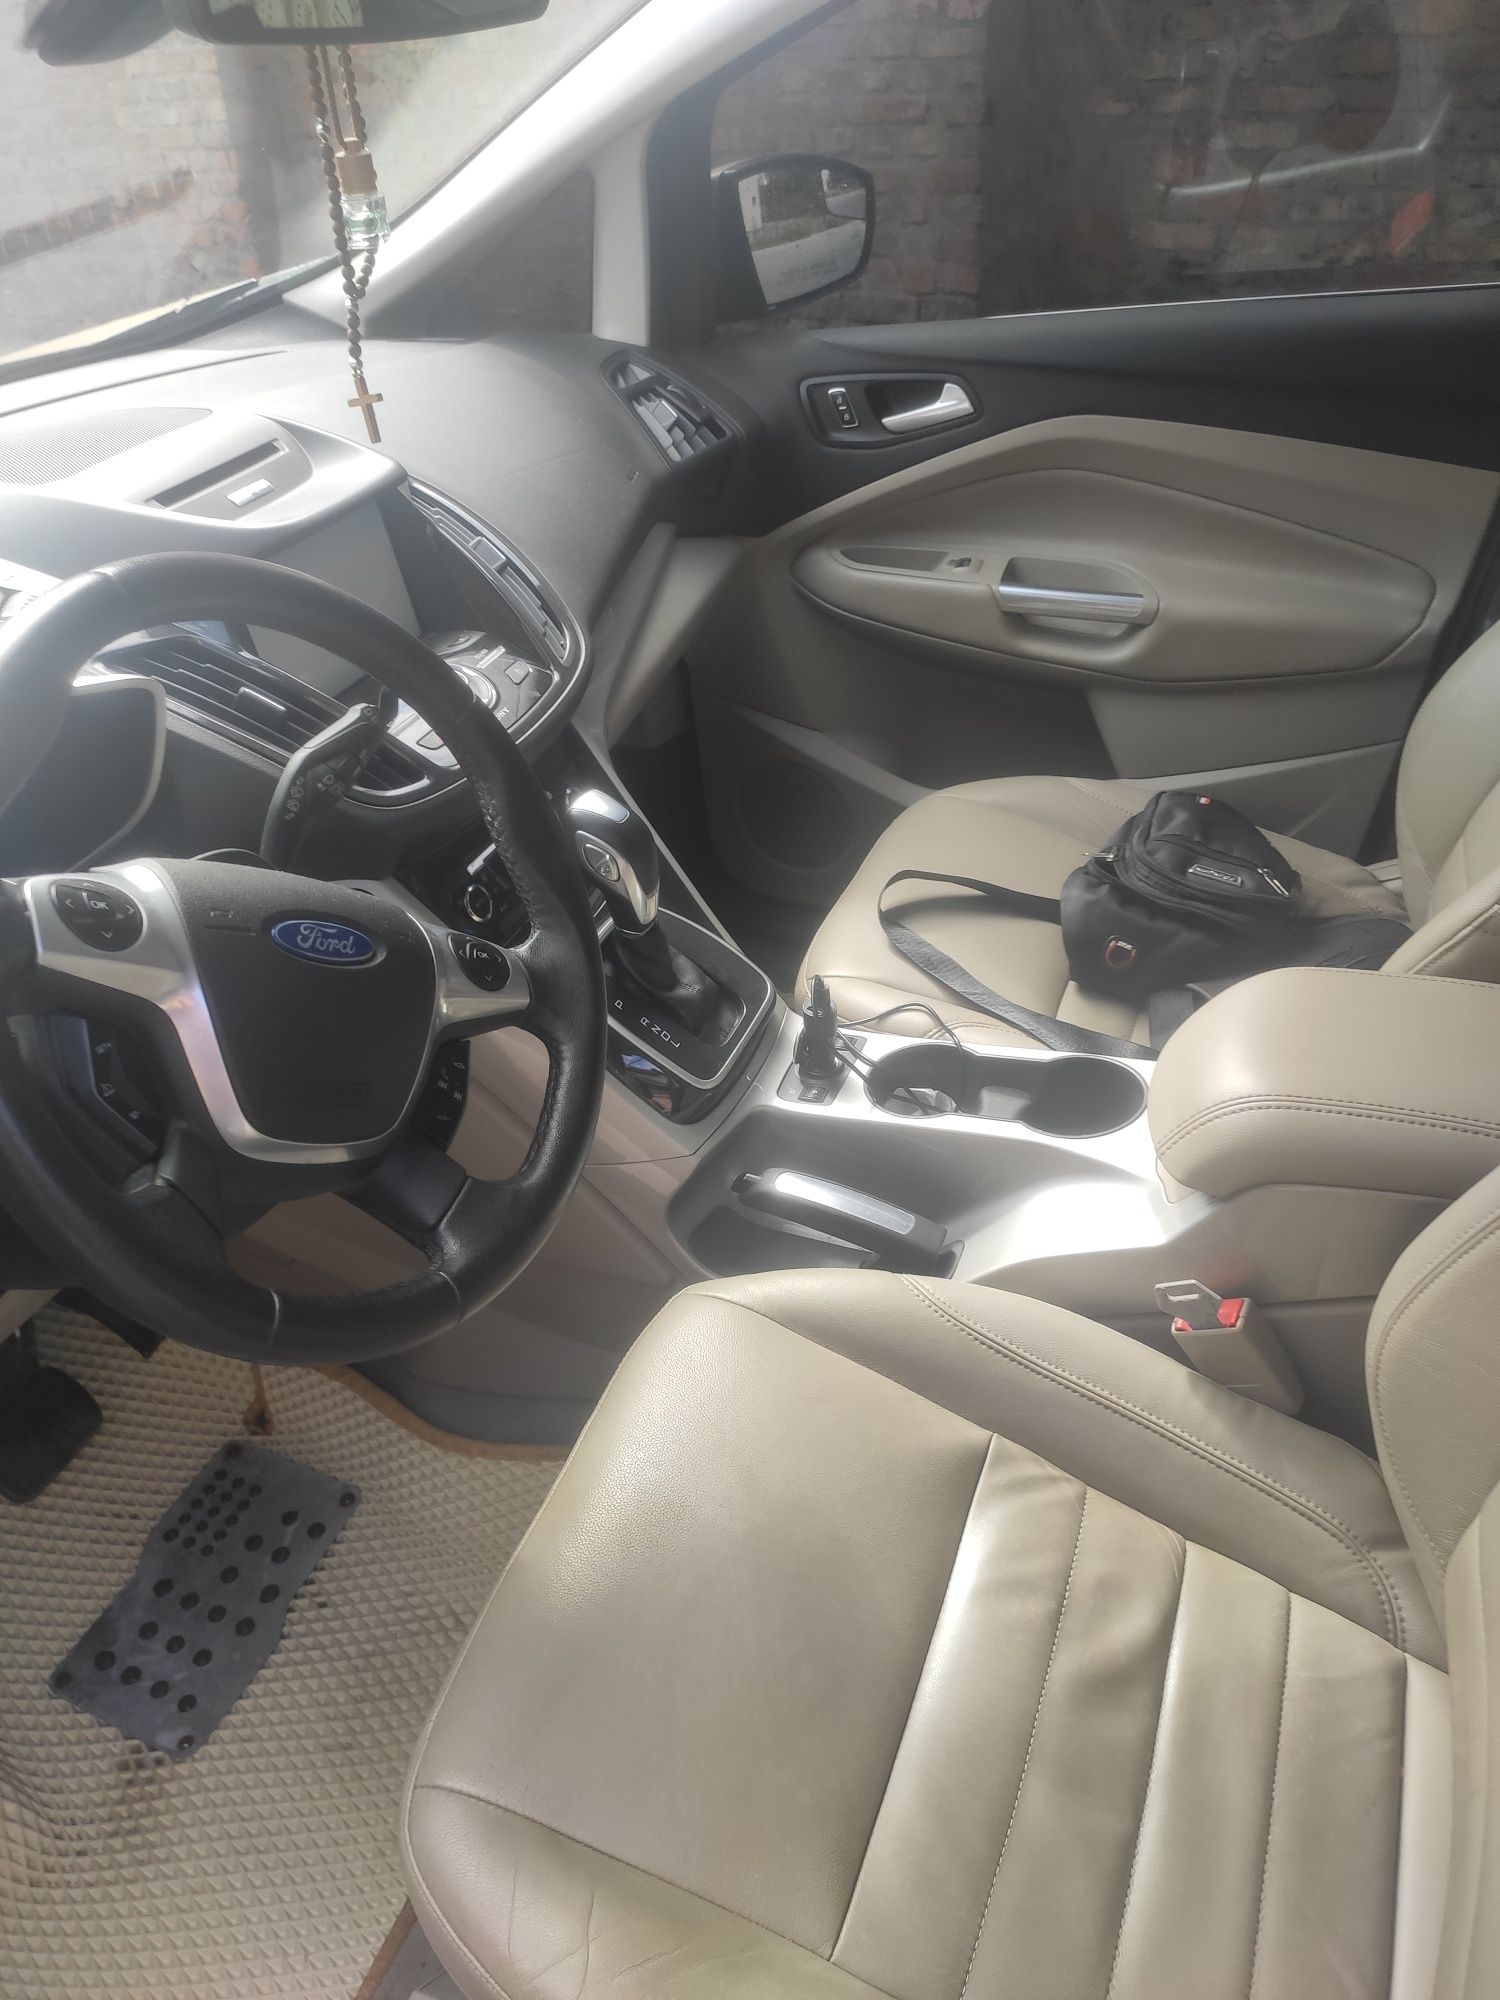 Ford C-max plagin SEL energy батарея 2019 рік 9 кВт, 100 soh